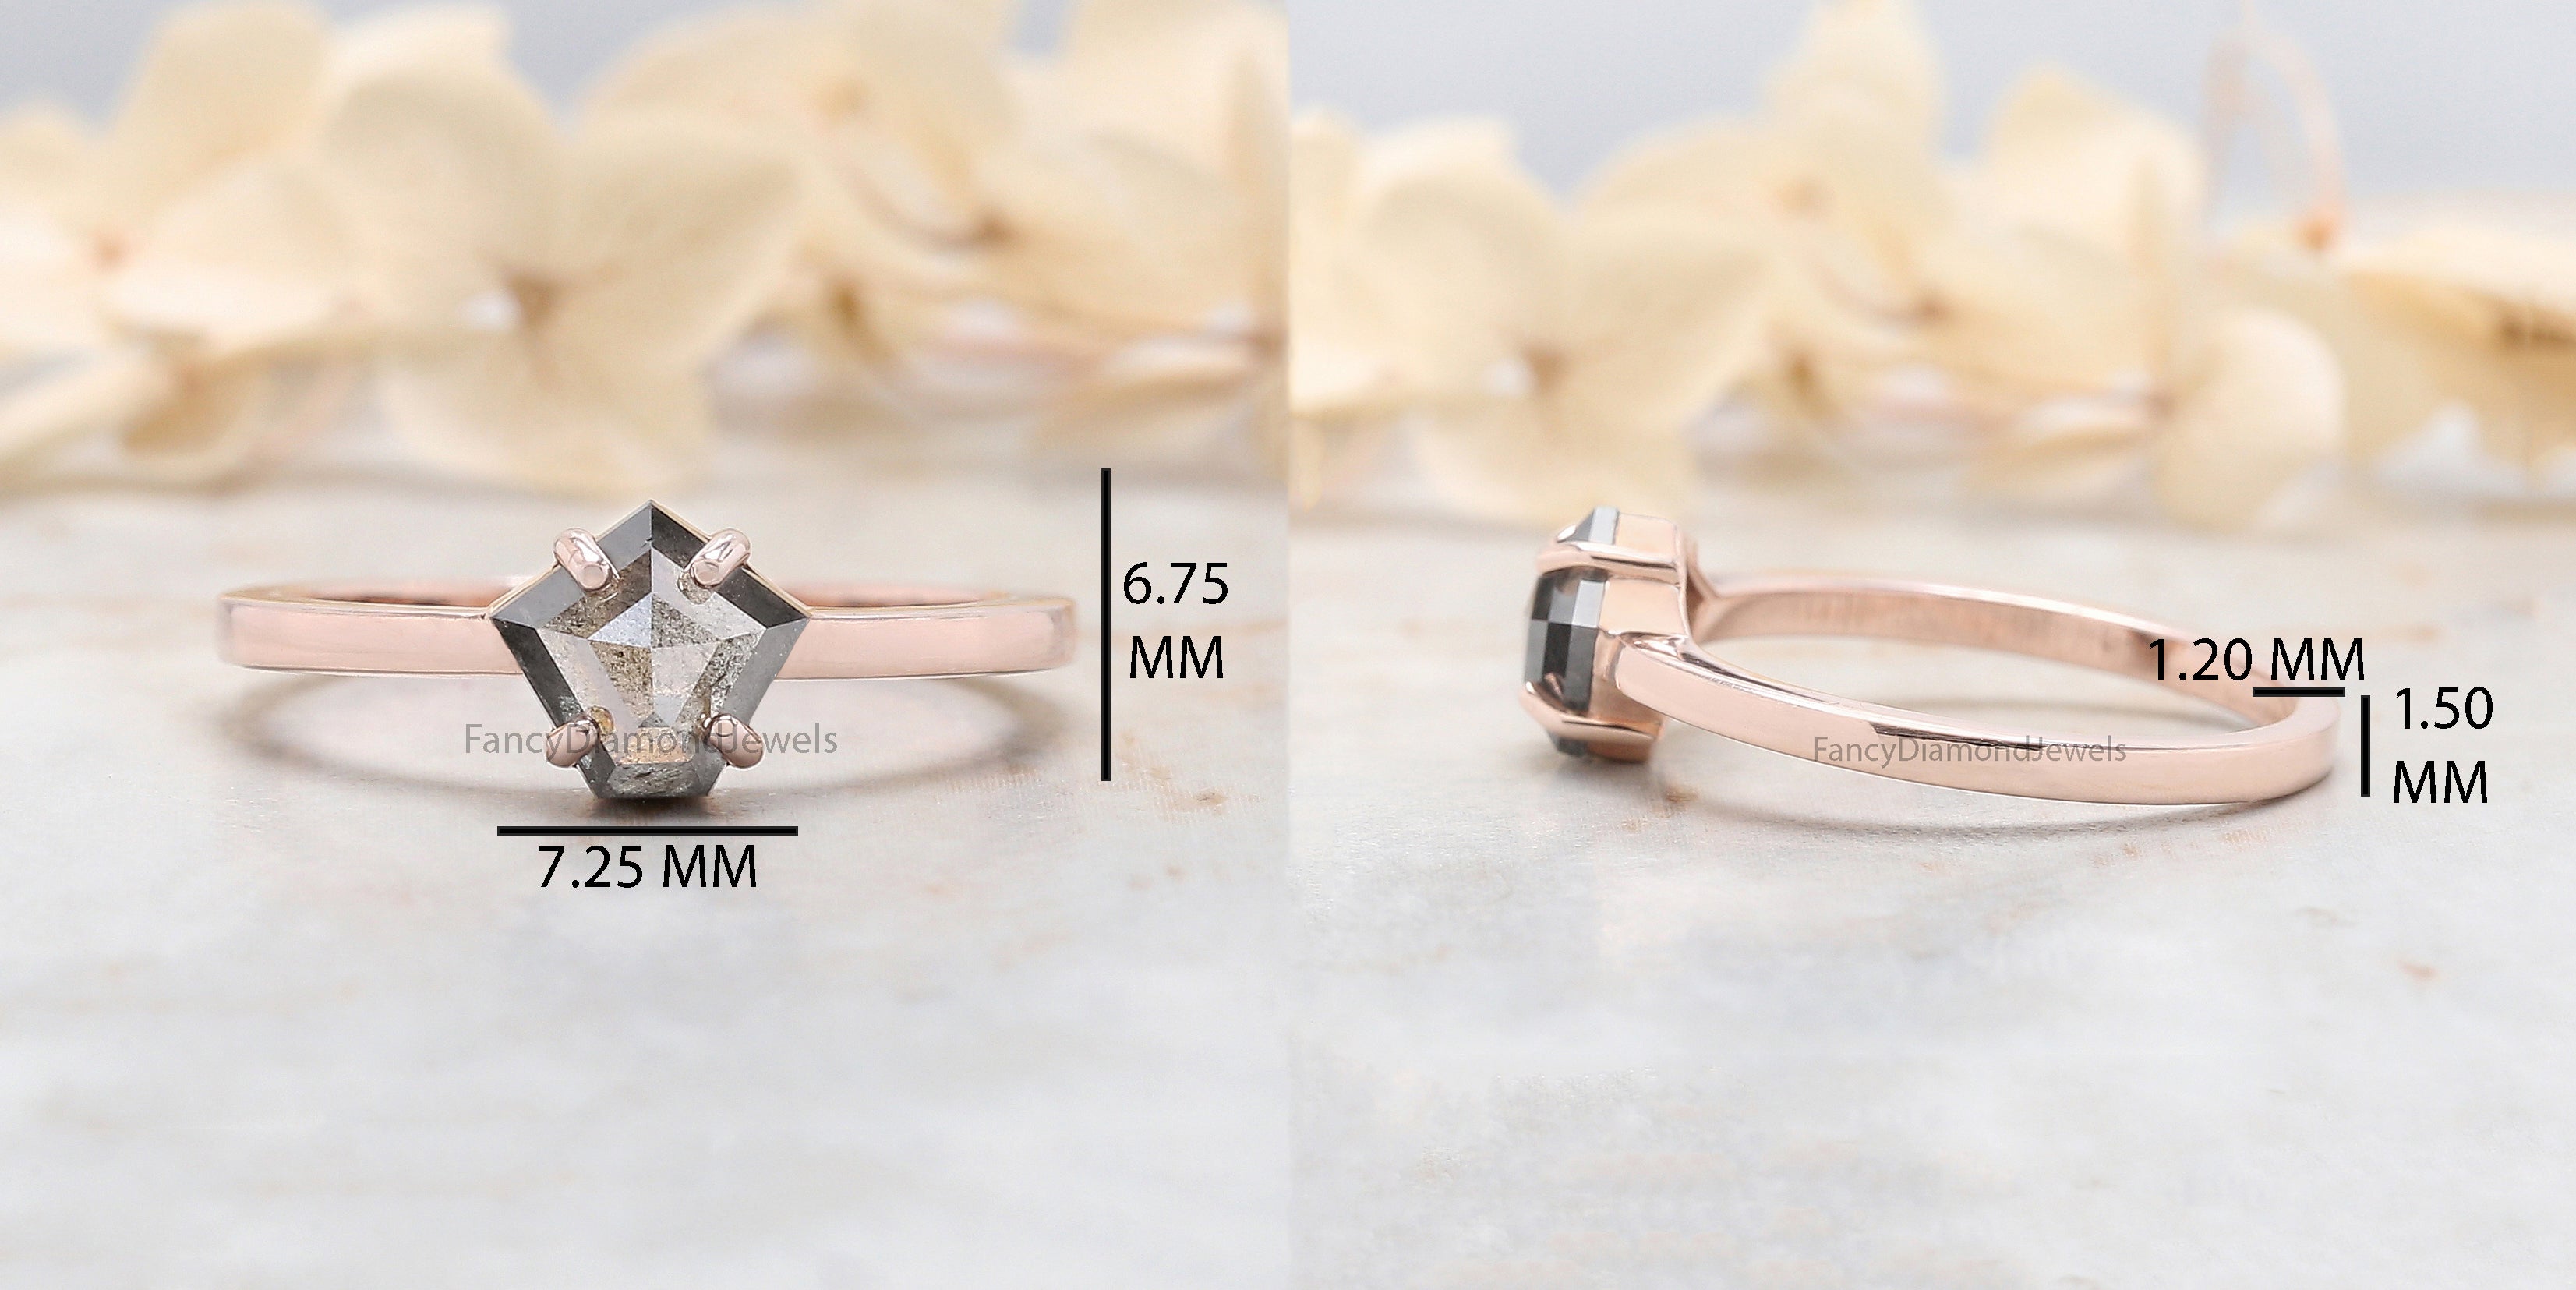 Pentagon Cut Salt And Pepper Diamond Ring 0.92 Ct 6.60 MM Pentagon Diamond Ring 14K Rose Gold Silver Engagement Ring Gift For Her QL438